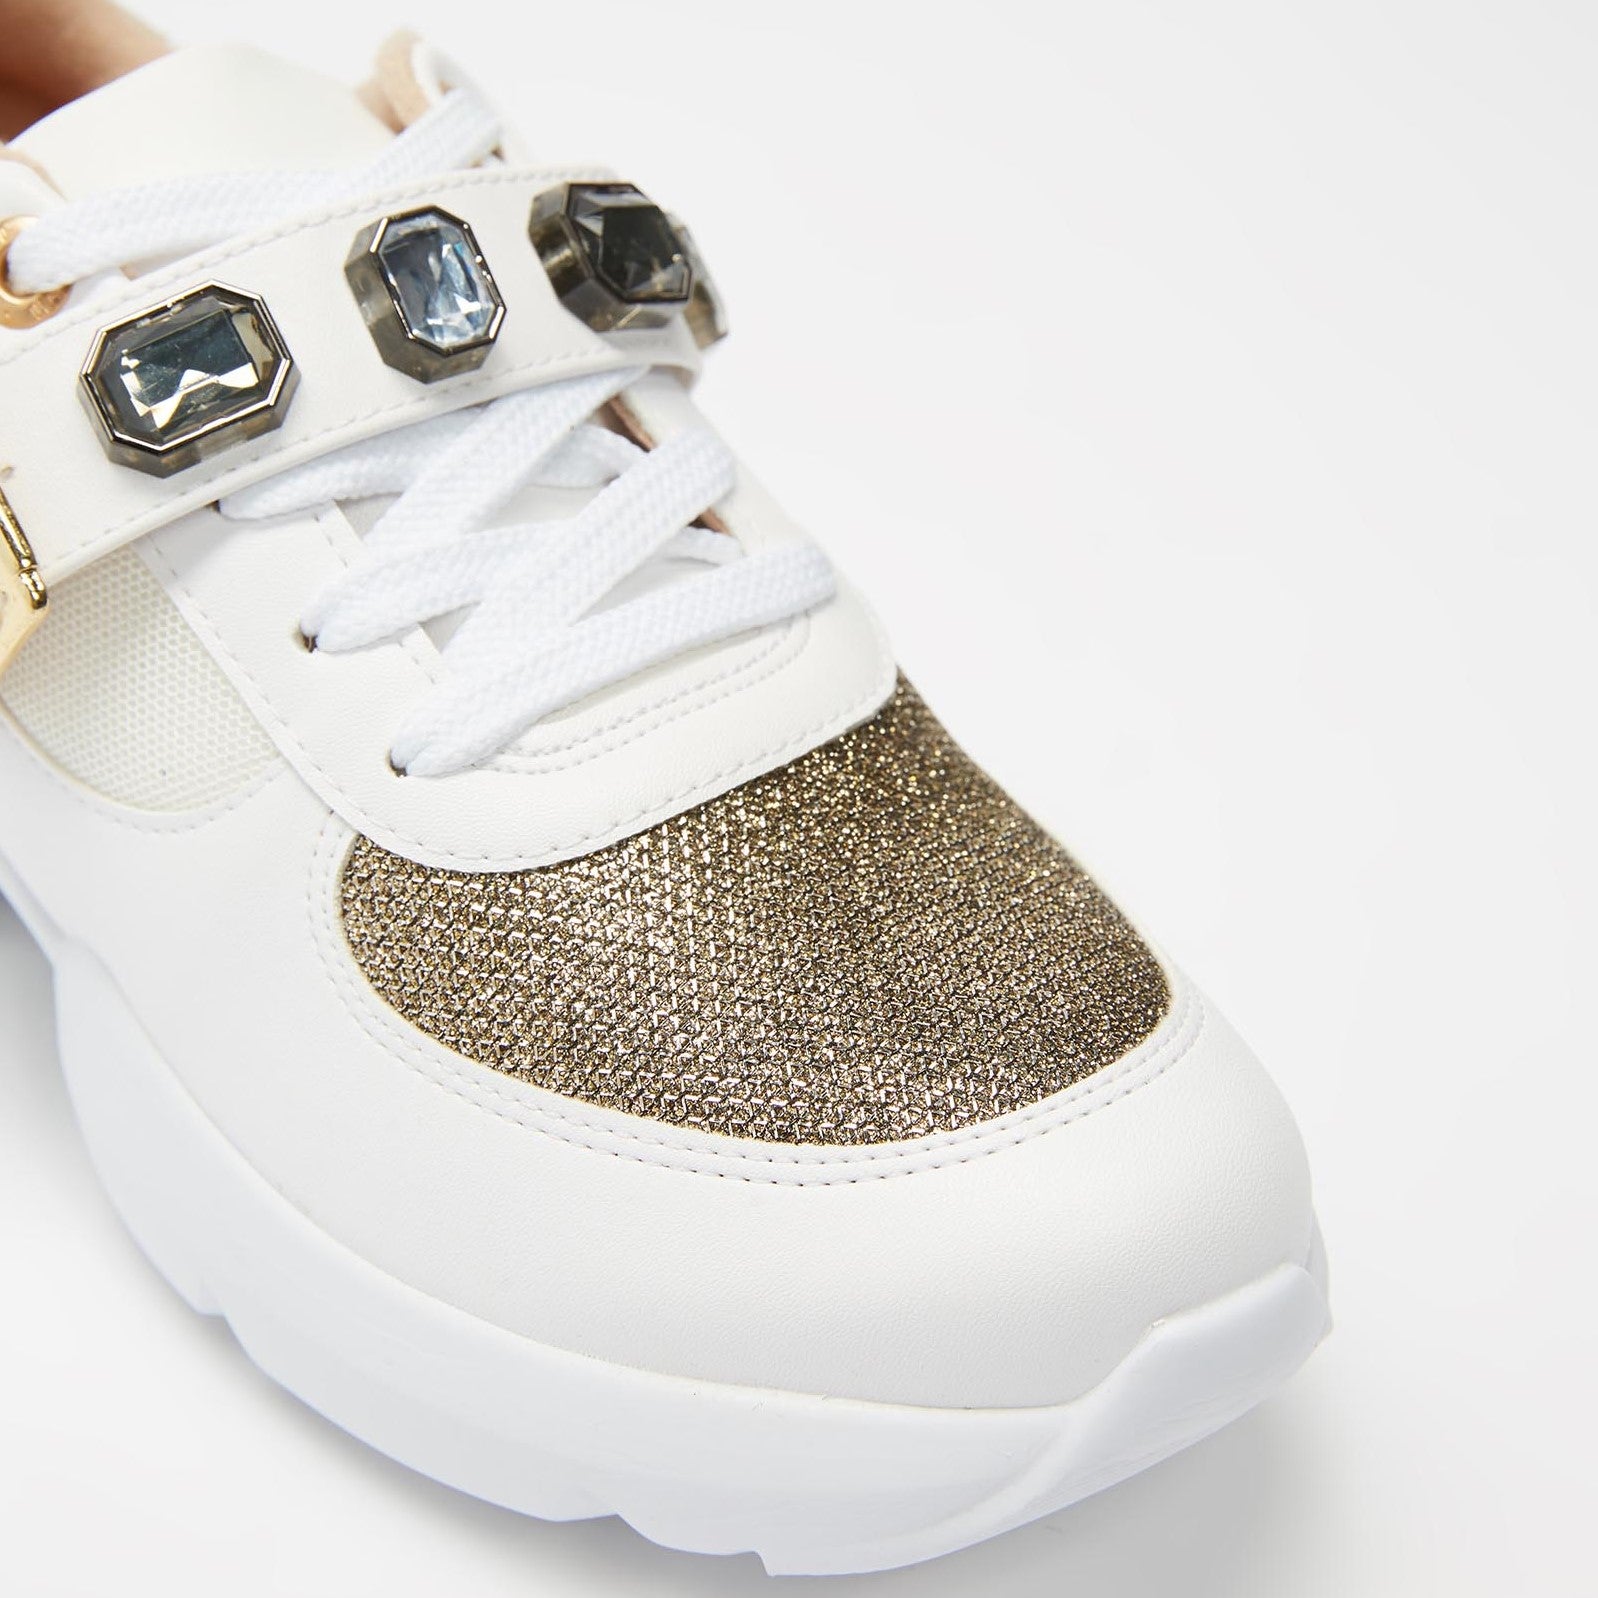 Vizzano 1314-113 Chunky Sole Sneaker in White and Gold